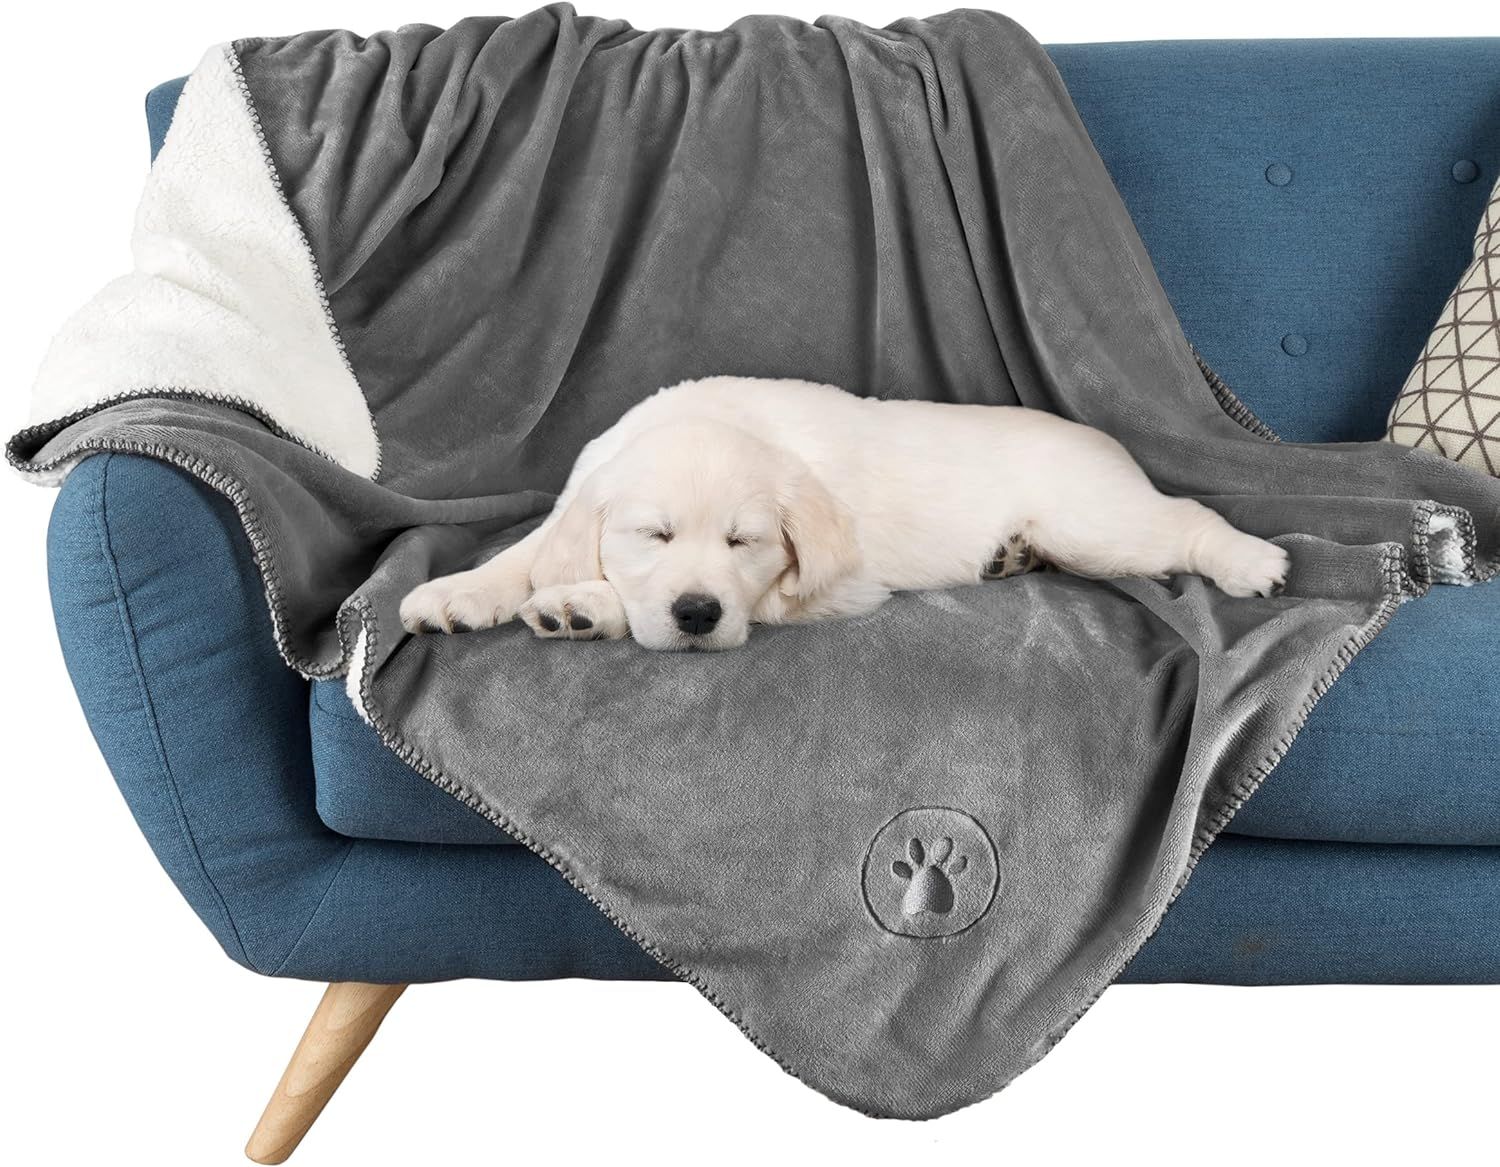 10 Best Pet Blankets for Cozy Comfort and Versatility